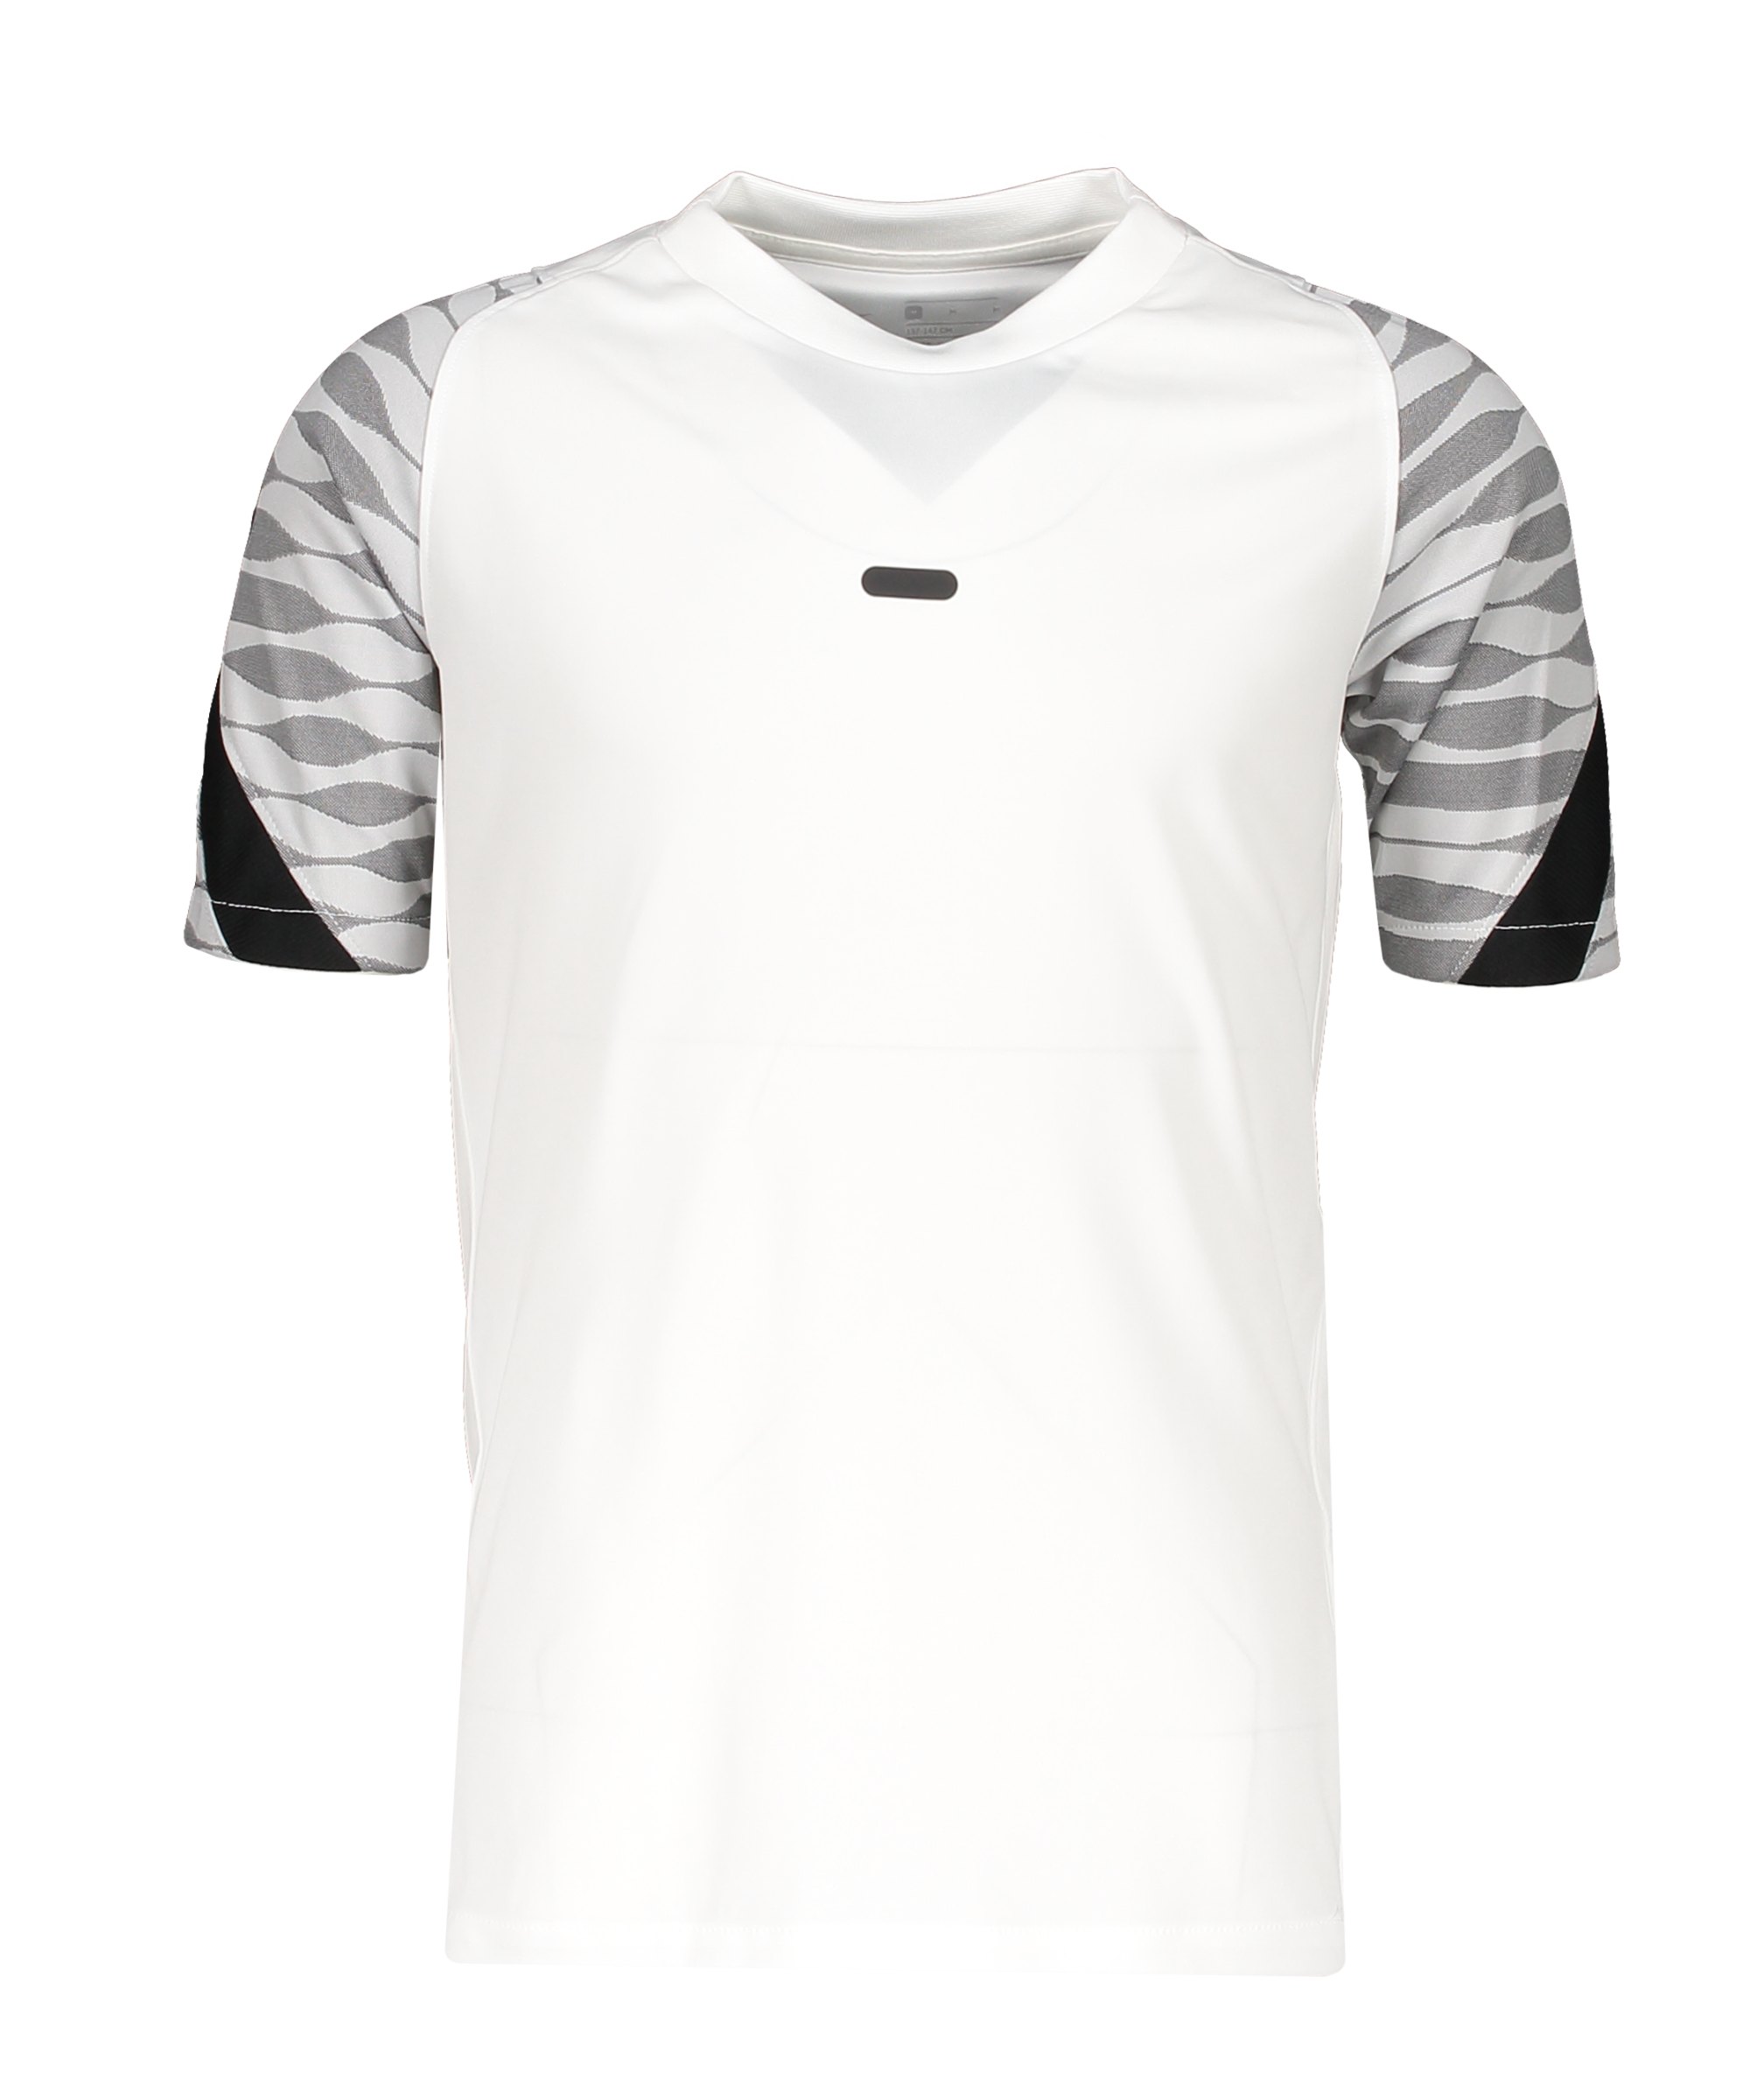 Nike Strike 21 T-Shirt Weiss Schwarz F100 - weiss